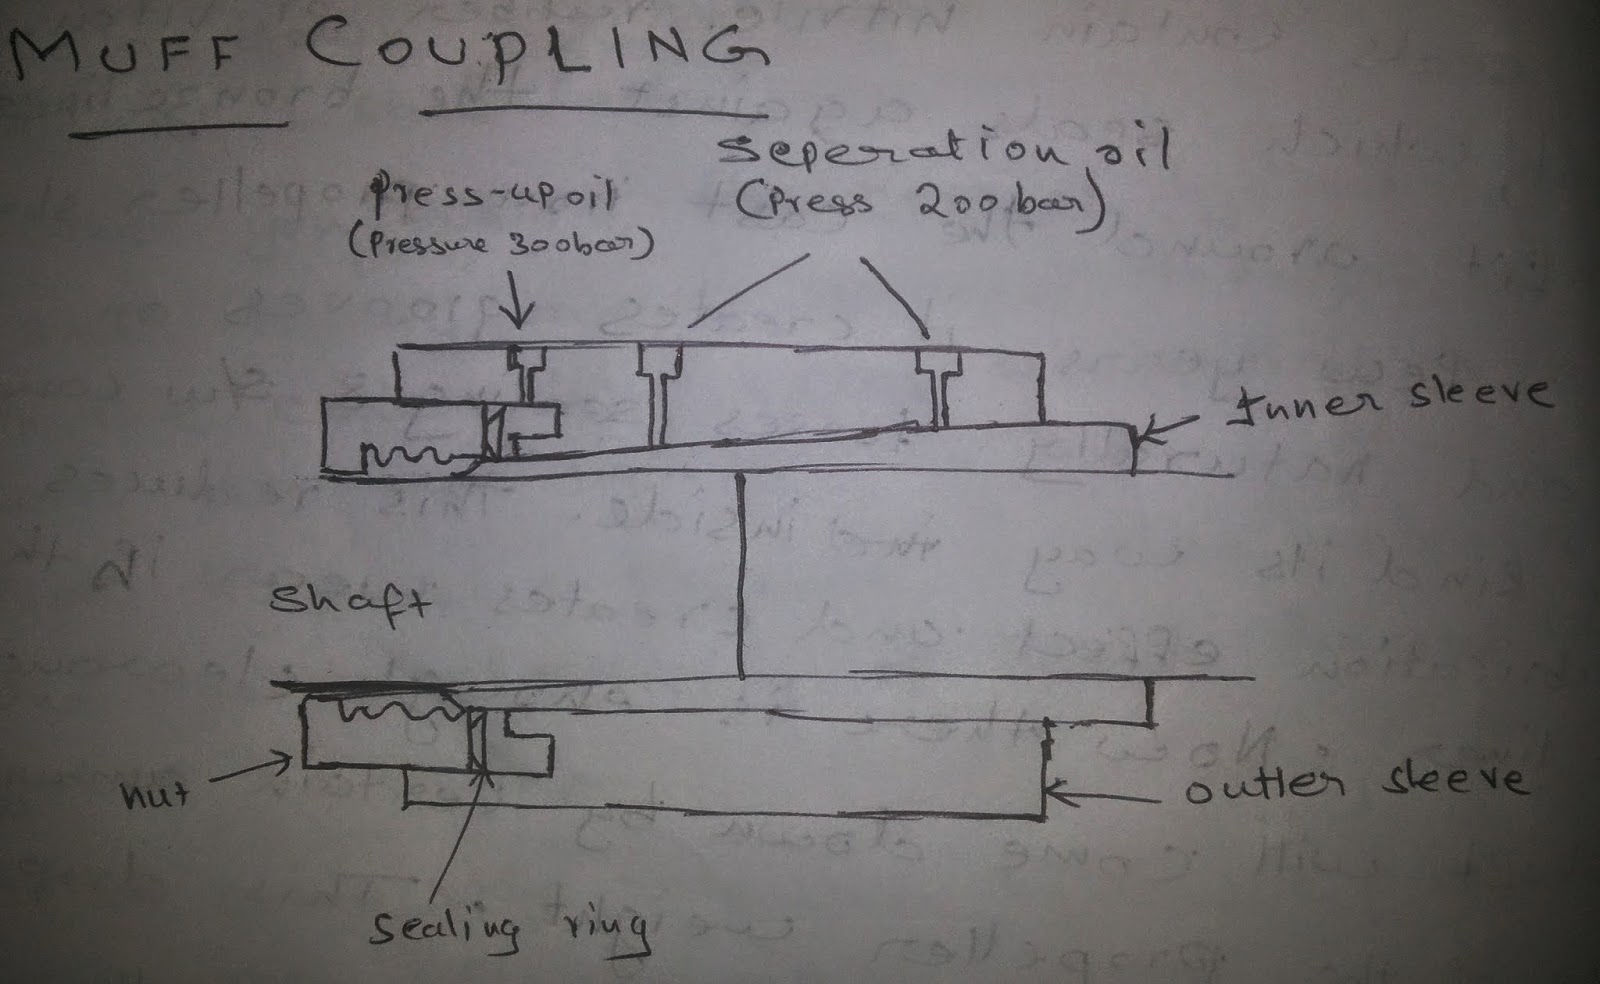 split muff coupling application